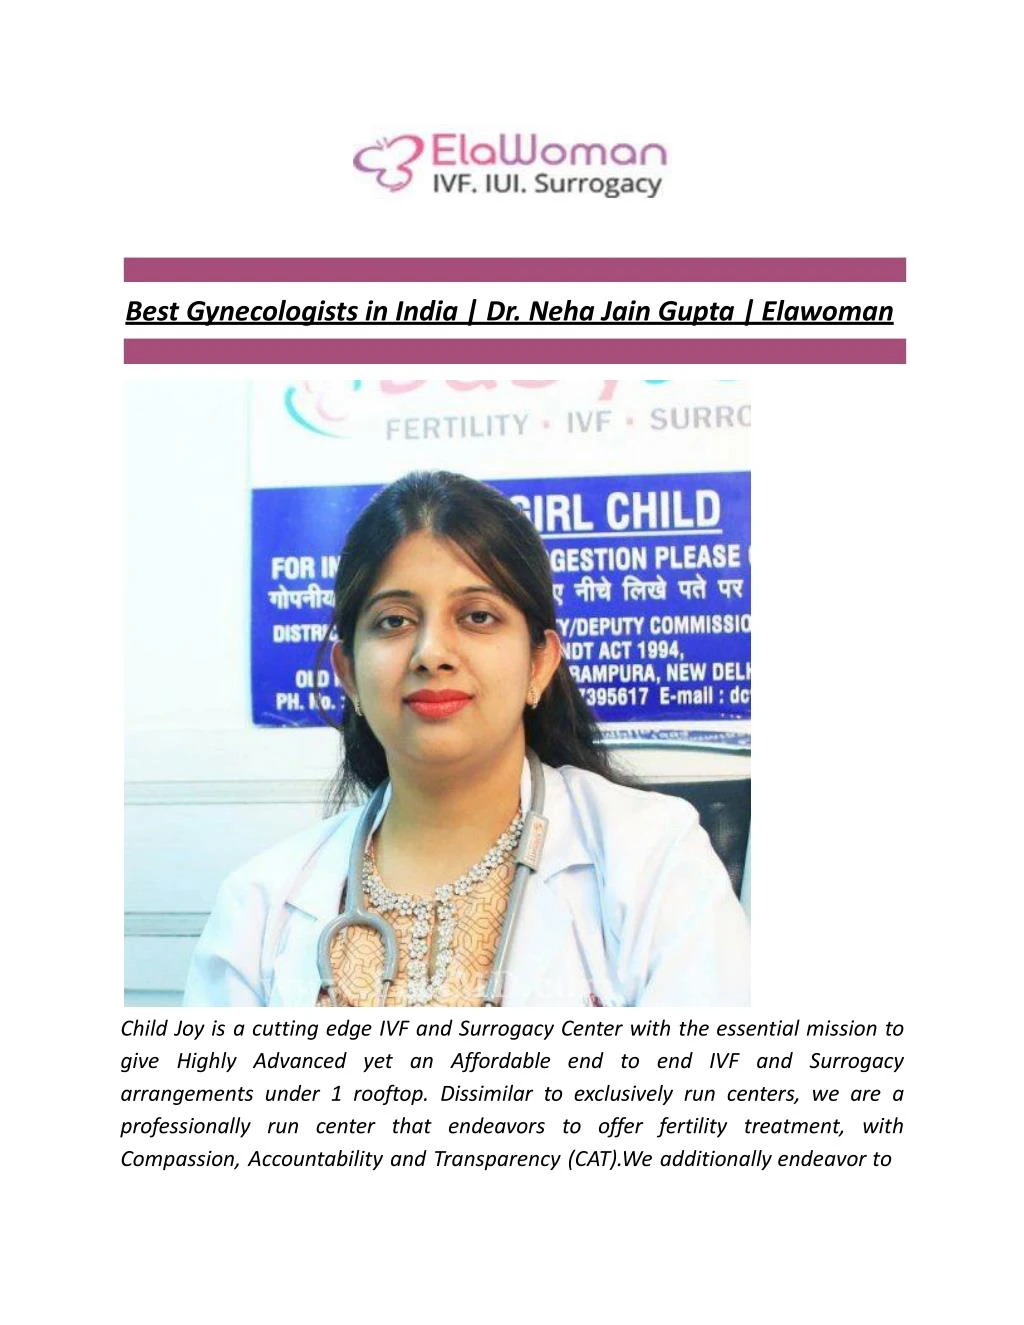 best gynecologists in india dr neha jain gupta